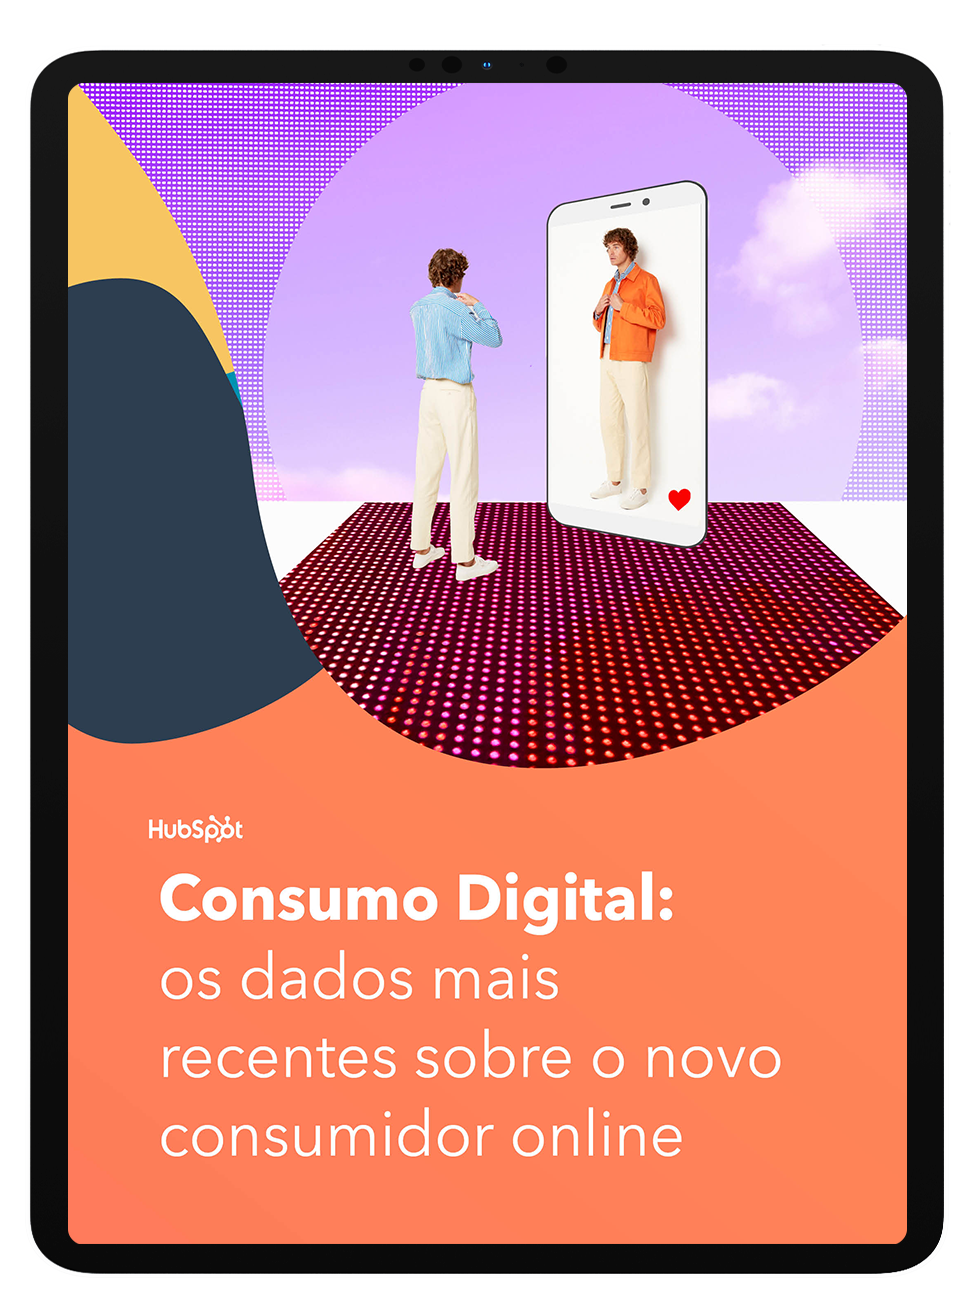 Mockup_Consumo-Digital